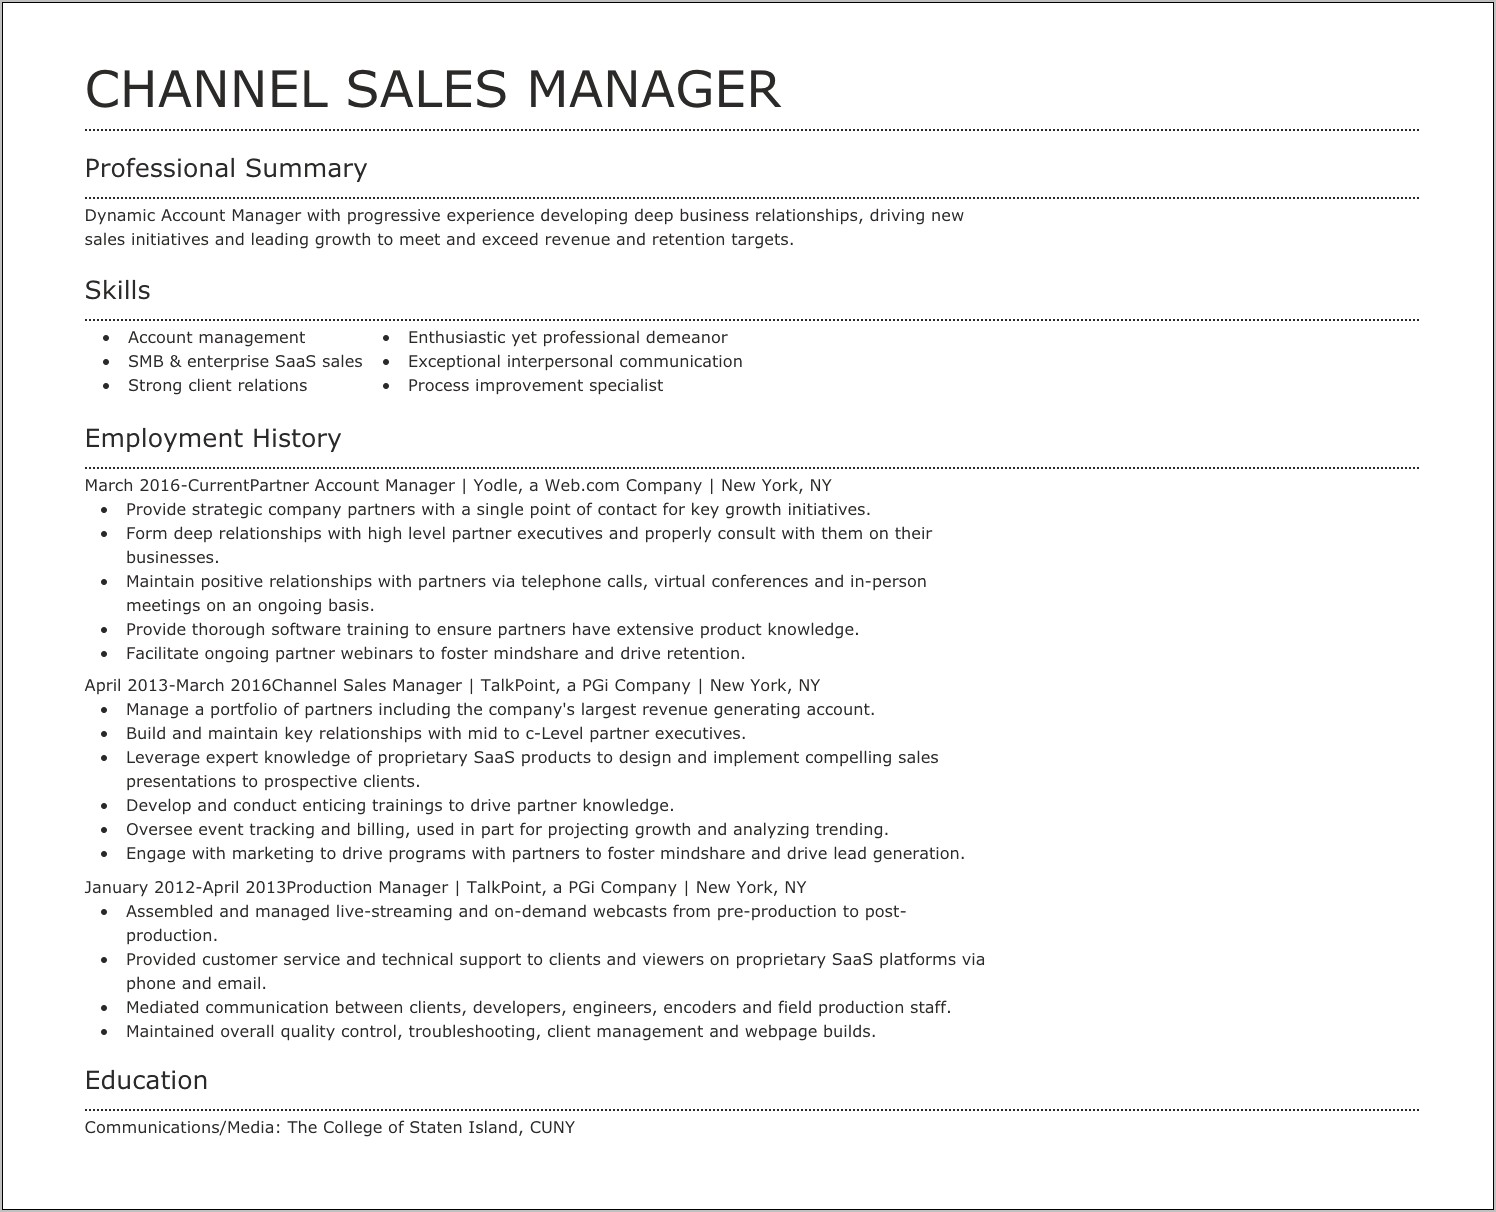 Customer Service Manager Job Description For Resume